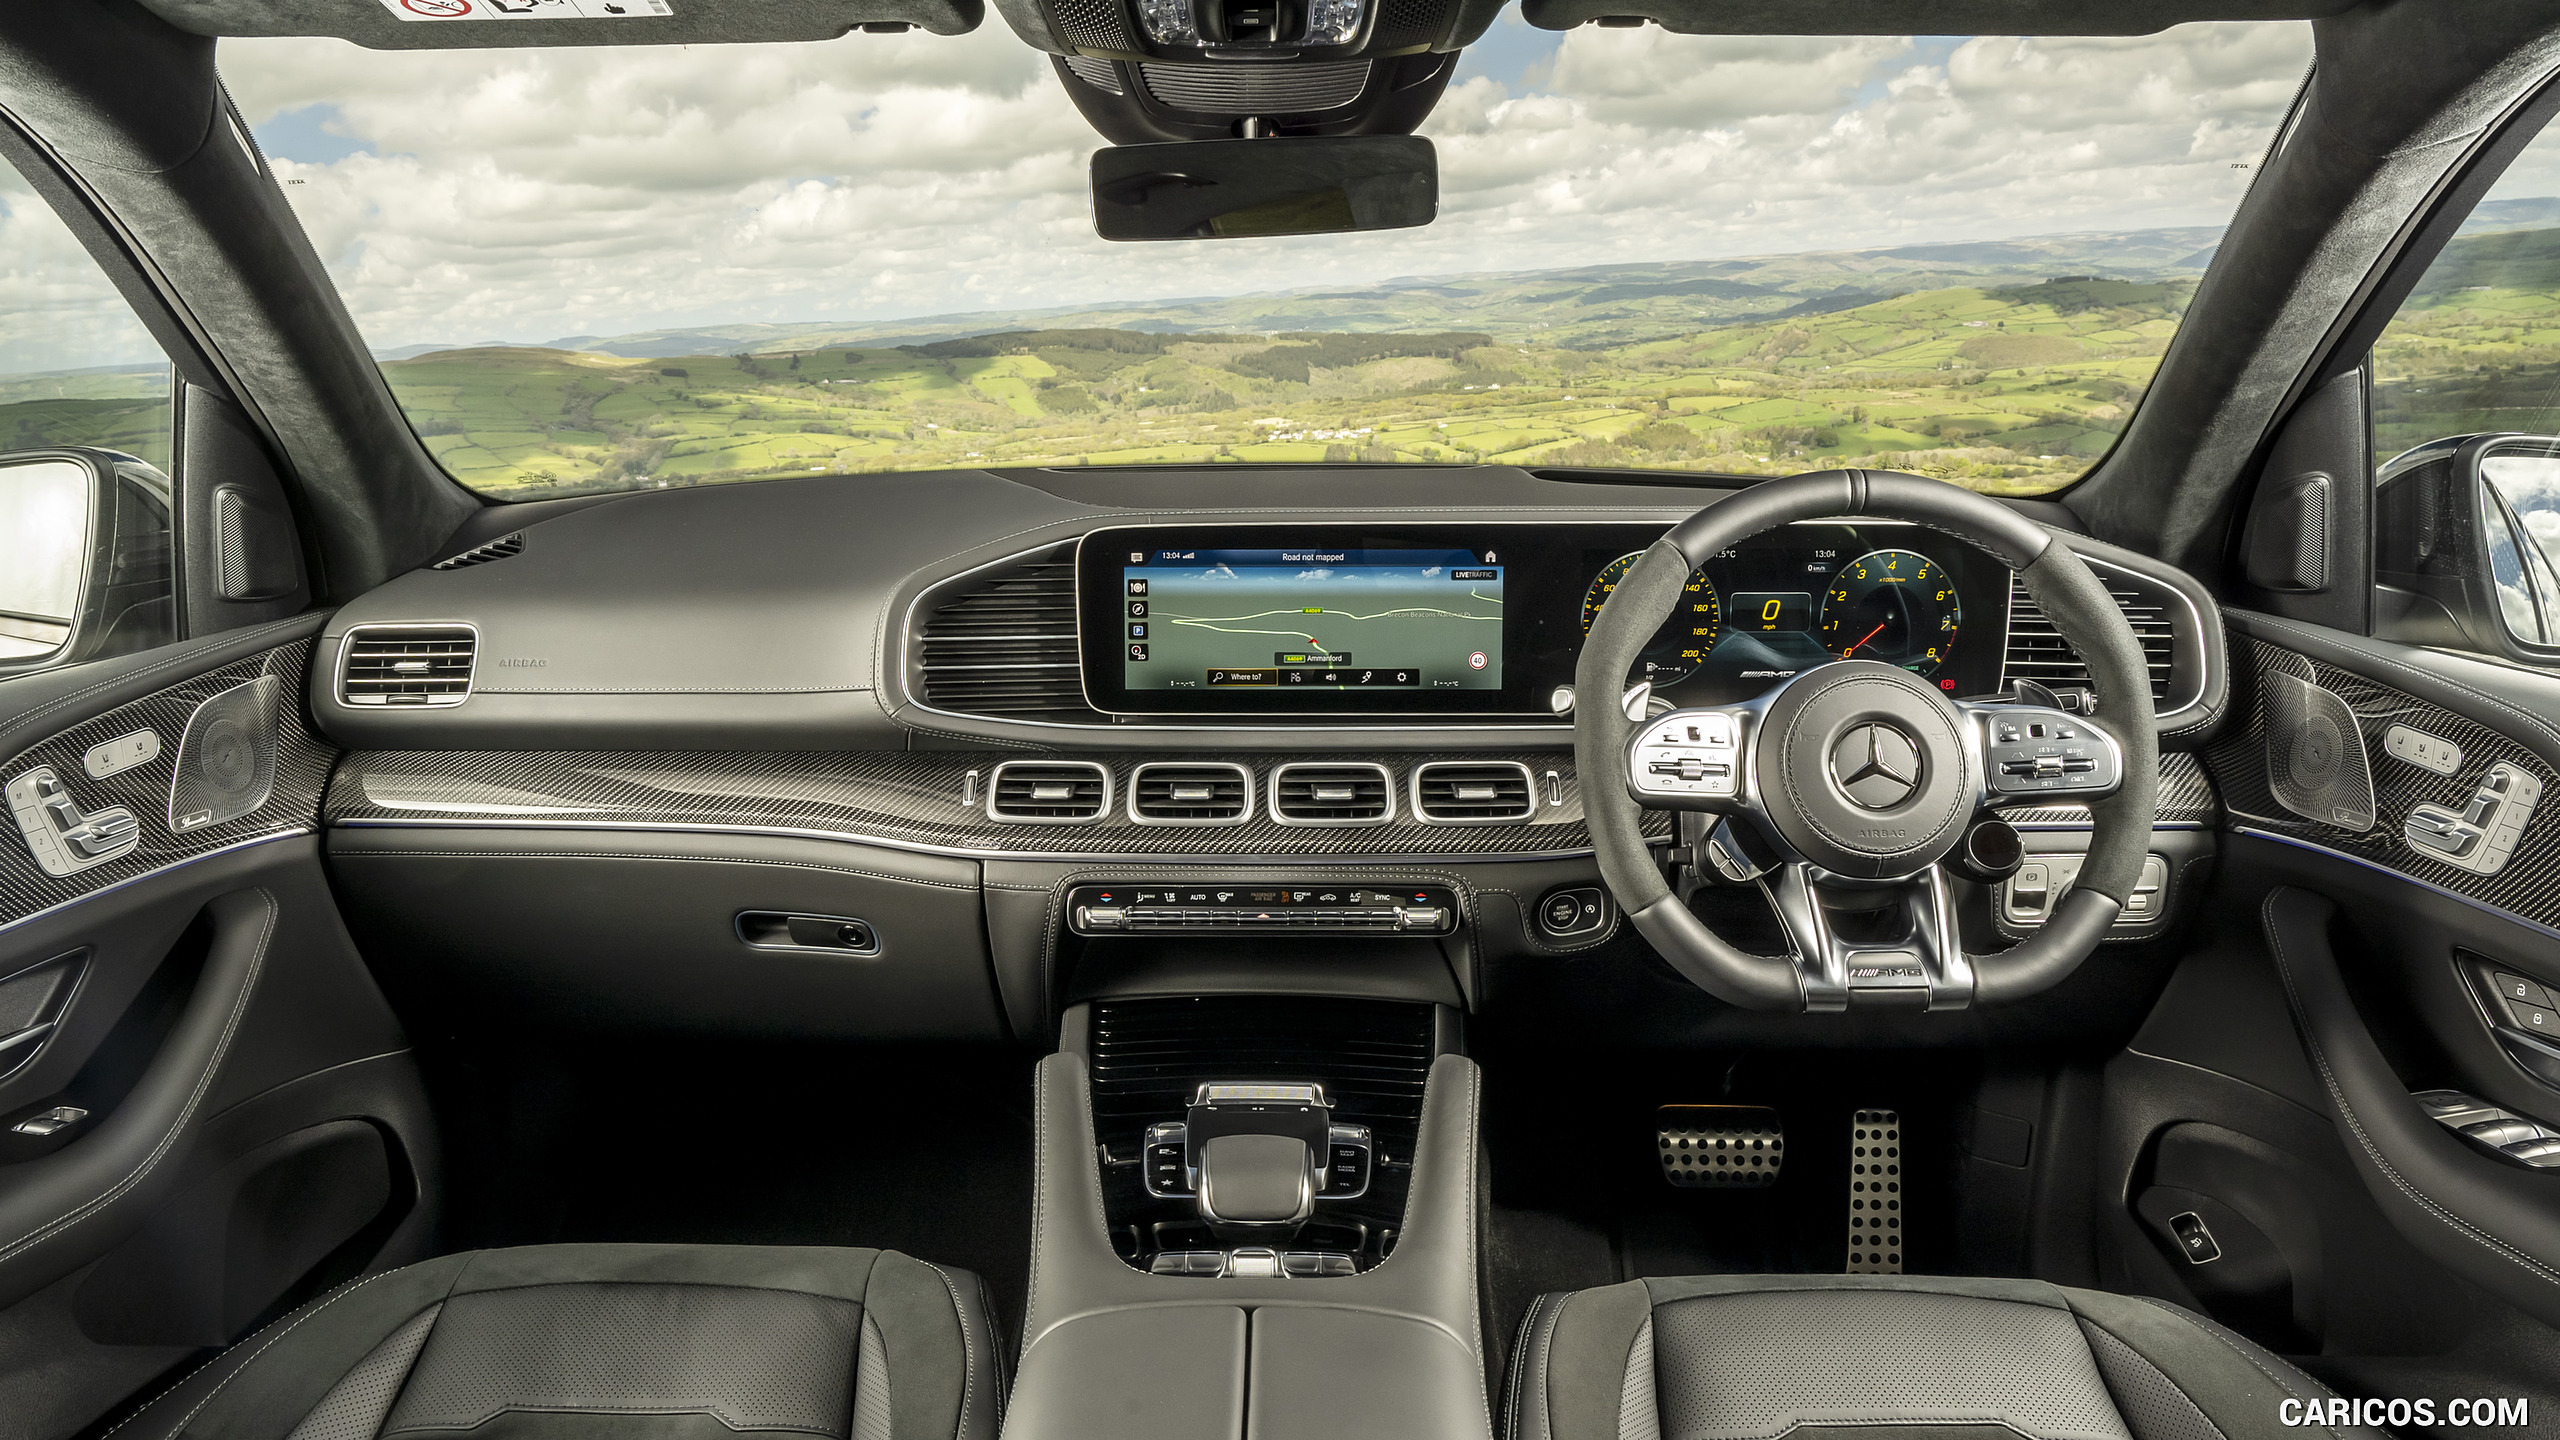 2021 Mercedes-AMG GLE 63 S 4MATIC (UK-Spec) - Interior, Cockpit, #161 of 187